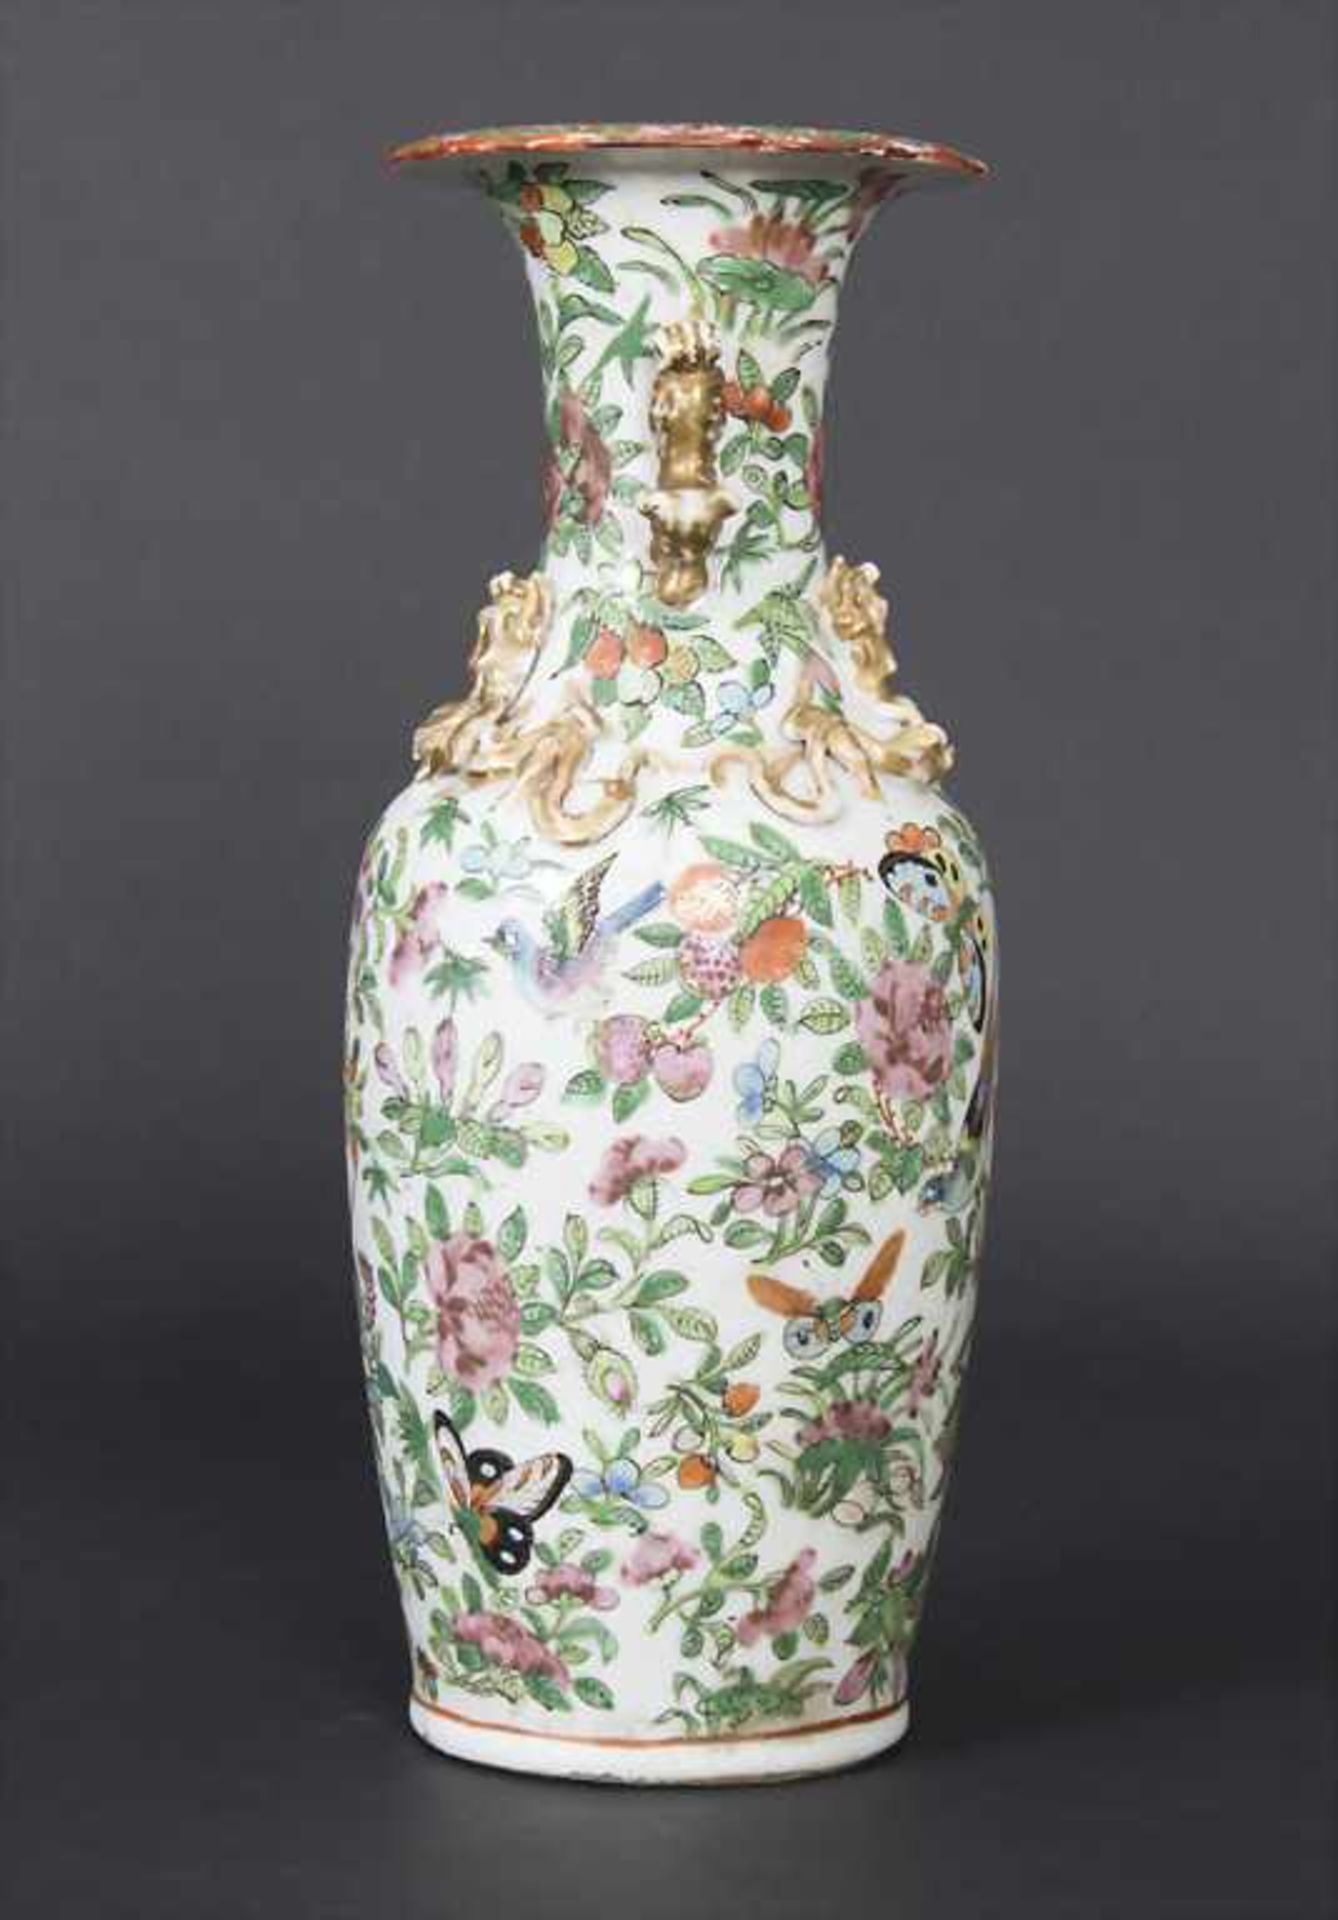 Kantonvase 'Familie Rose Dekor', China um 1900Material: Porzellan polychrome bemalt mit Blüten und - Image 2 of 7